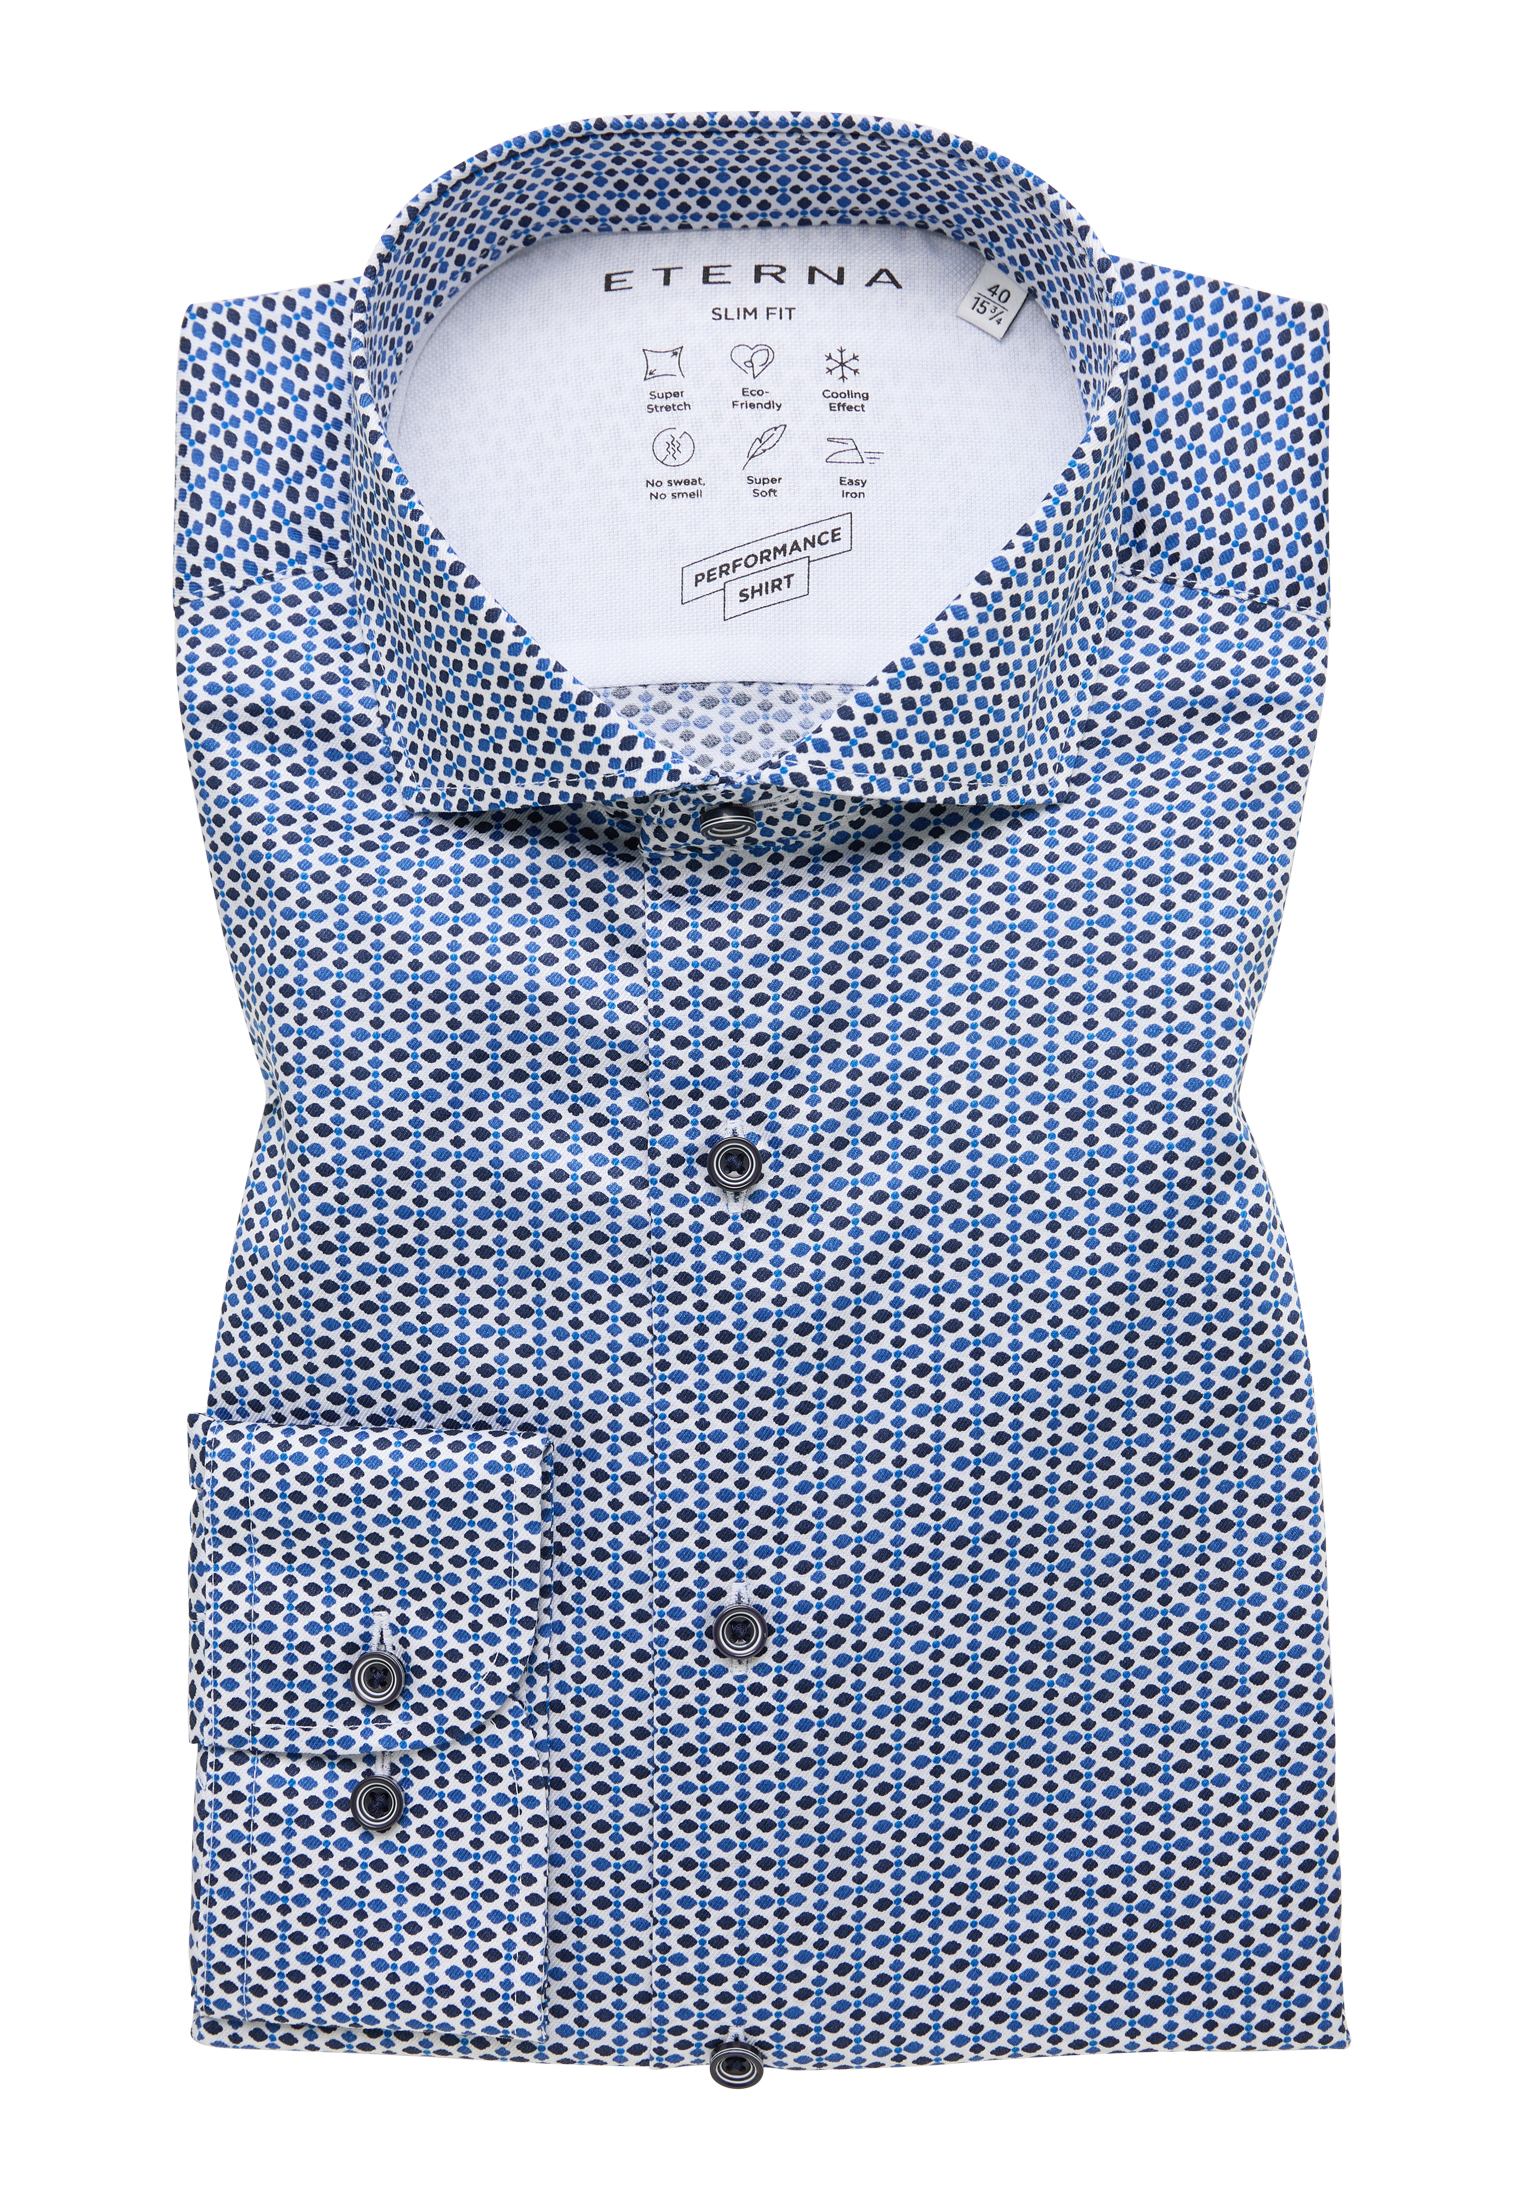 SLIM FIT Performance Shirt in | 38 bedruckt blau Langarm | 1SH12682-01-41-38-1/1 | blau 